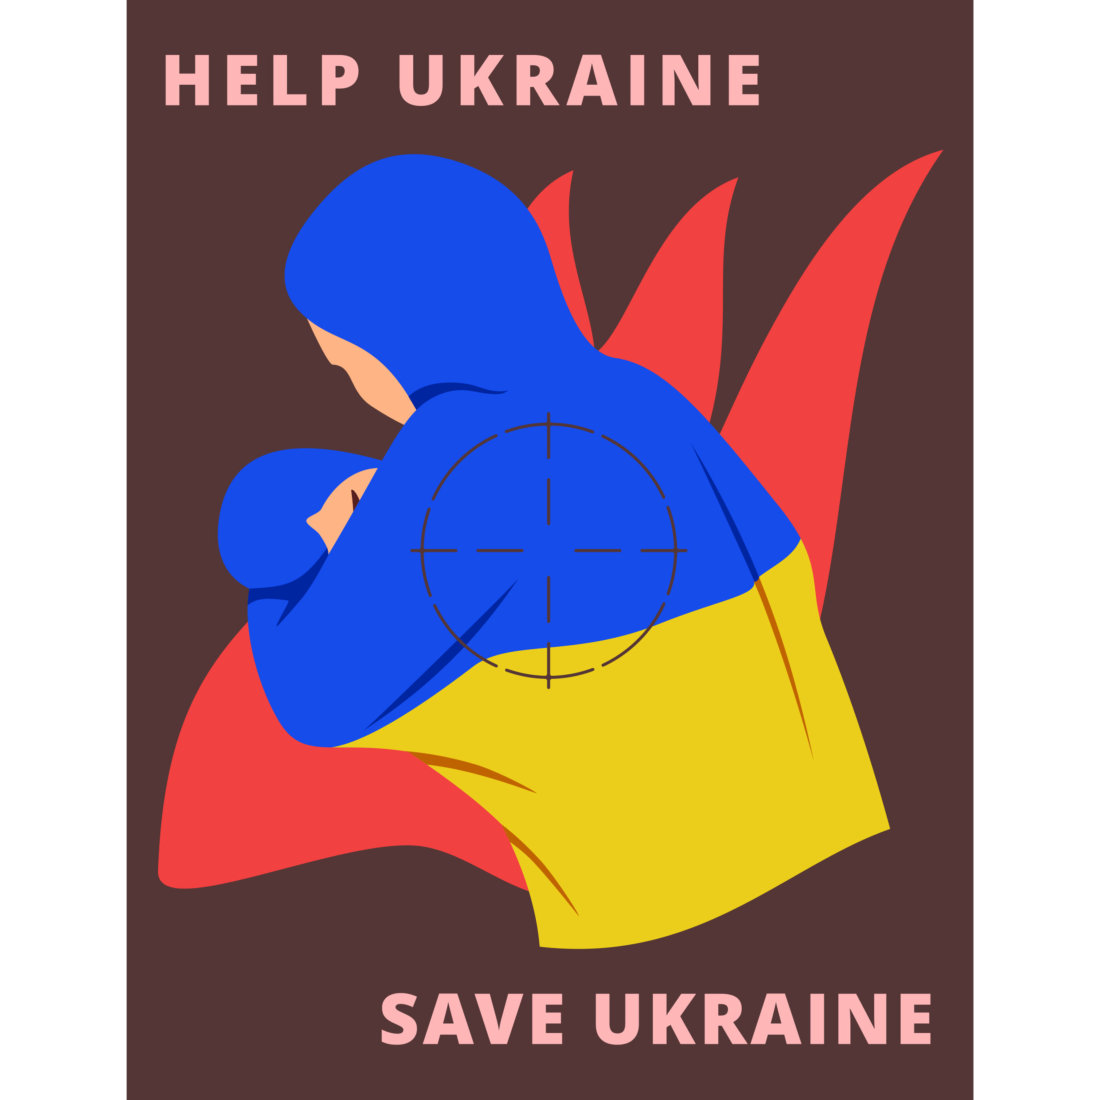 Help Ukraine illustration.